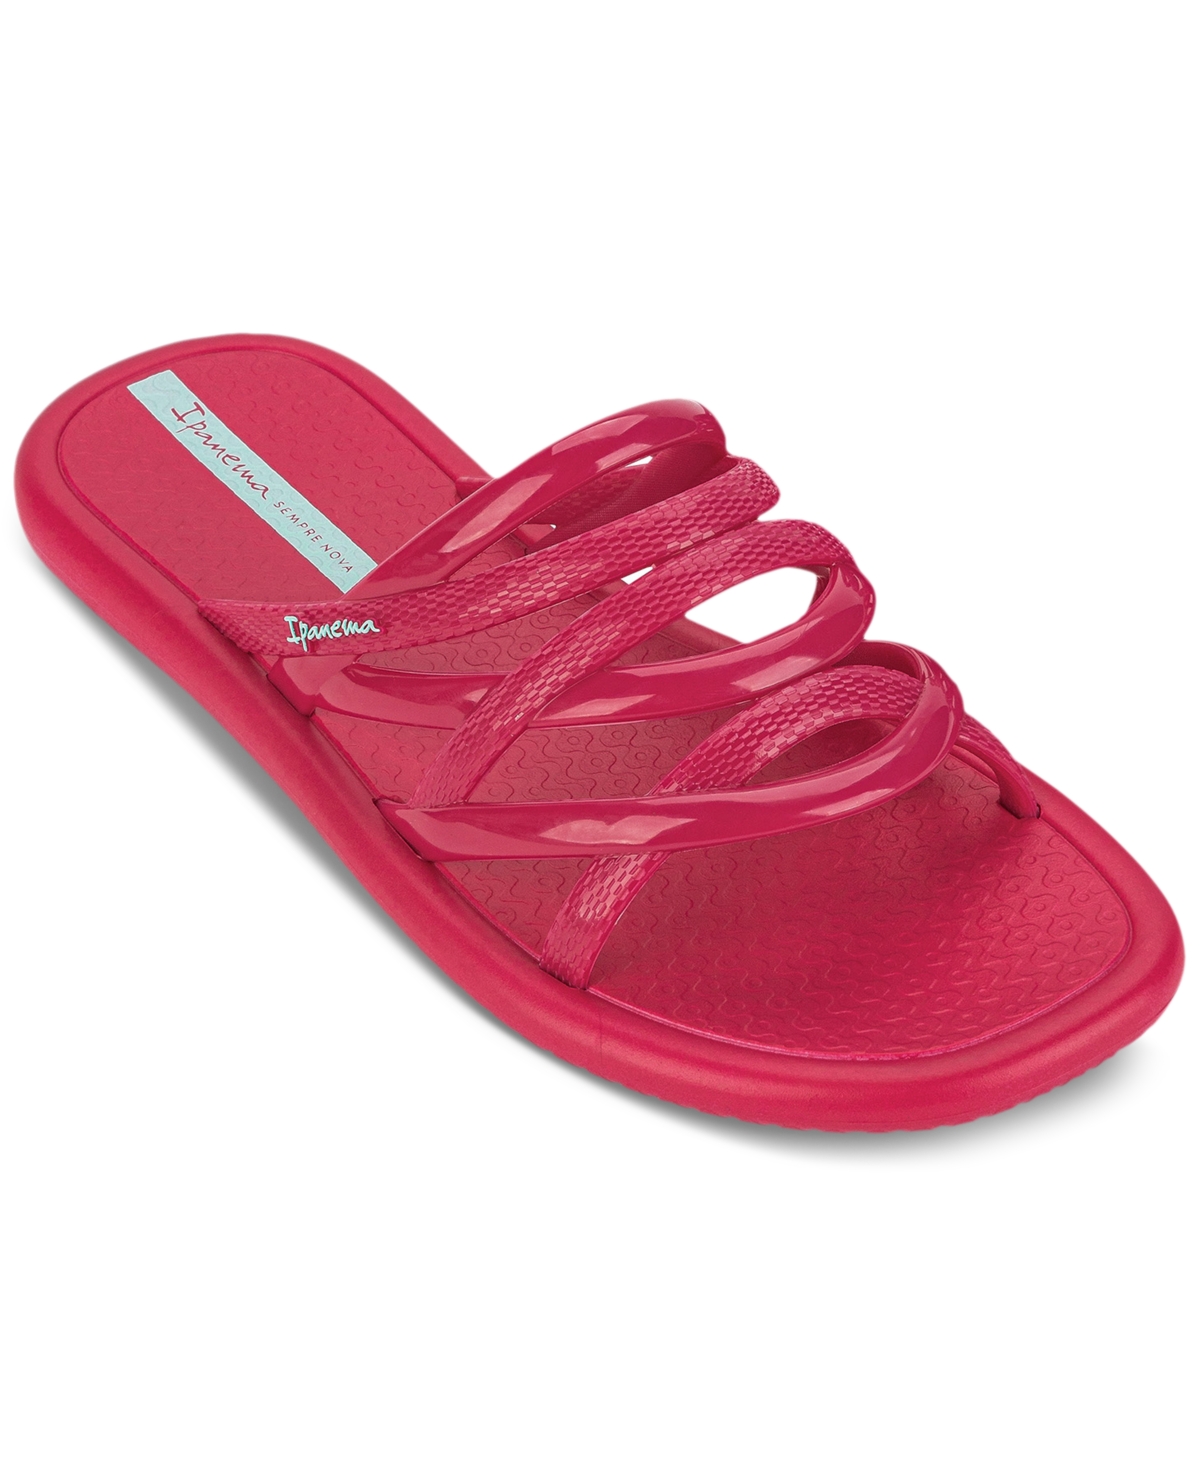 x Shakira Women's Sol Strappy Slide Sandals - Light Pink